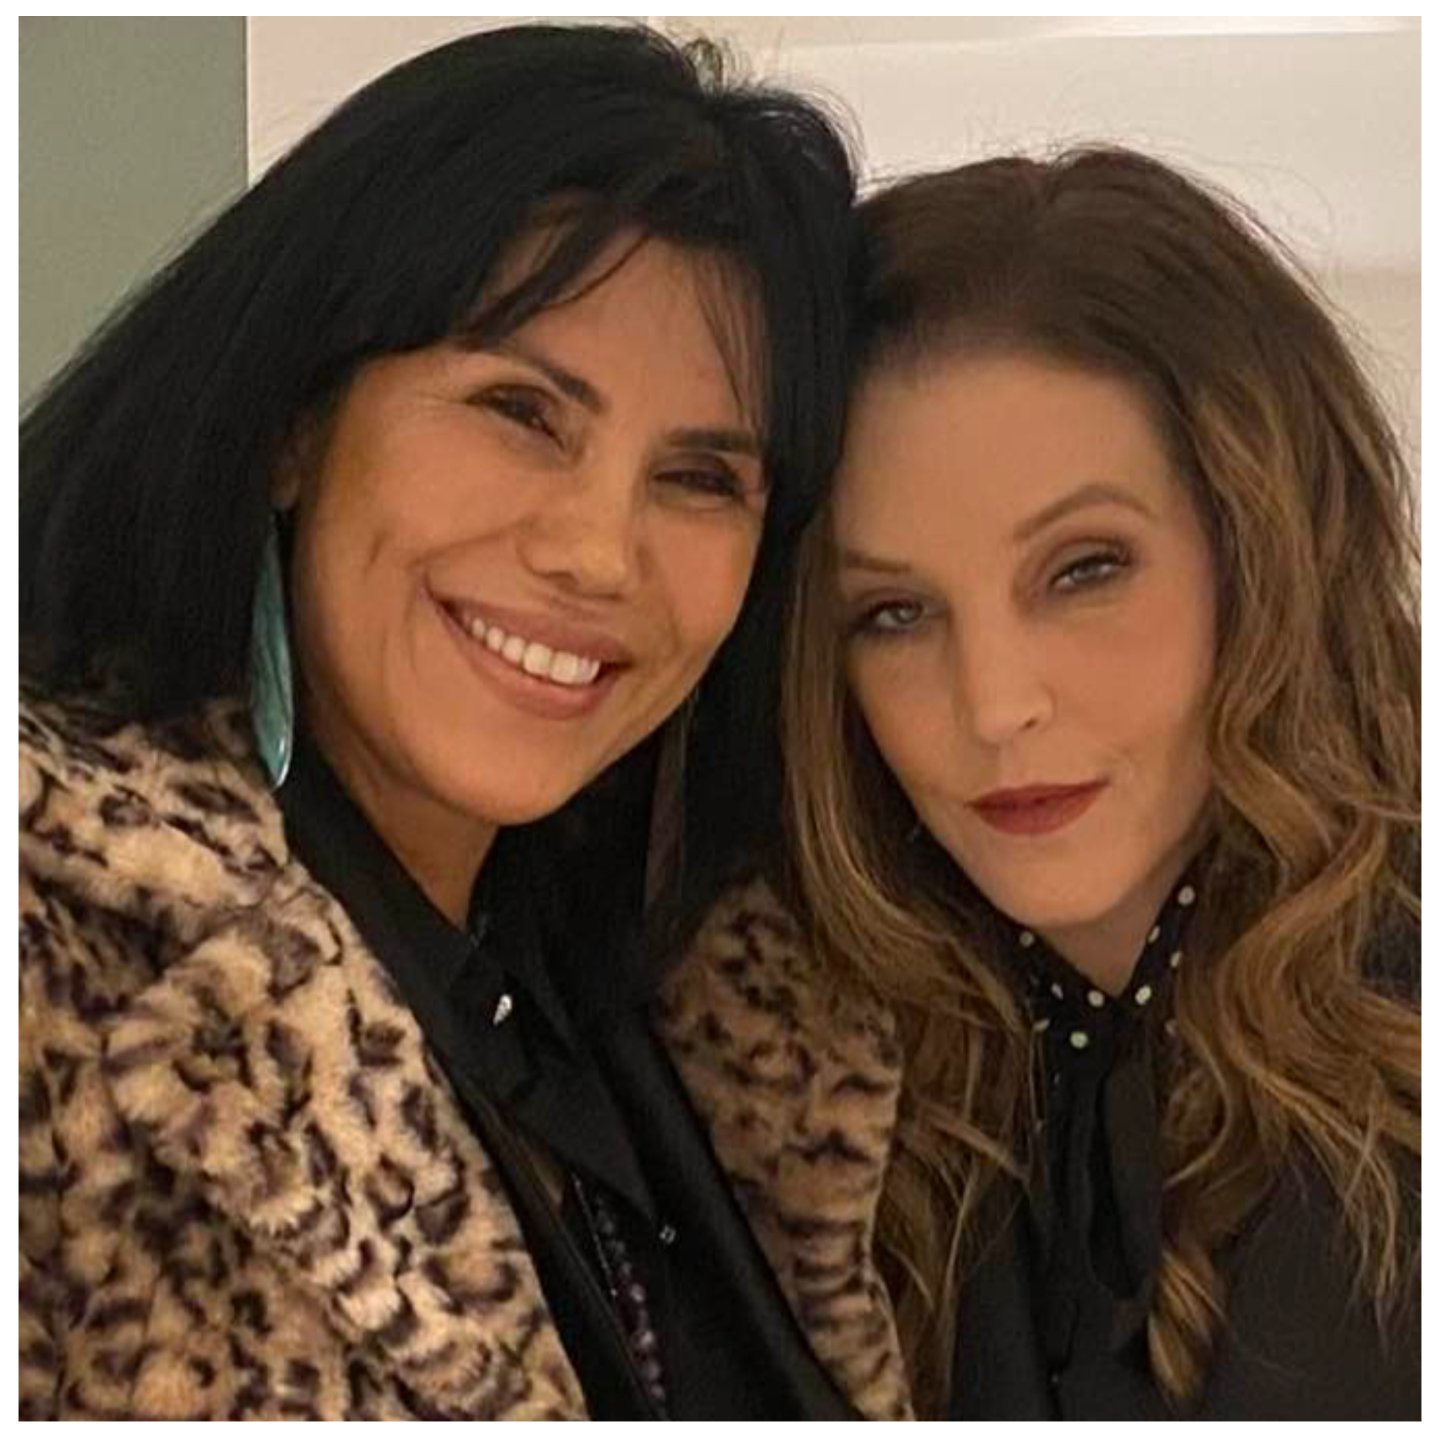 Joanelle Romero and Lisa Marie Presley 